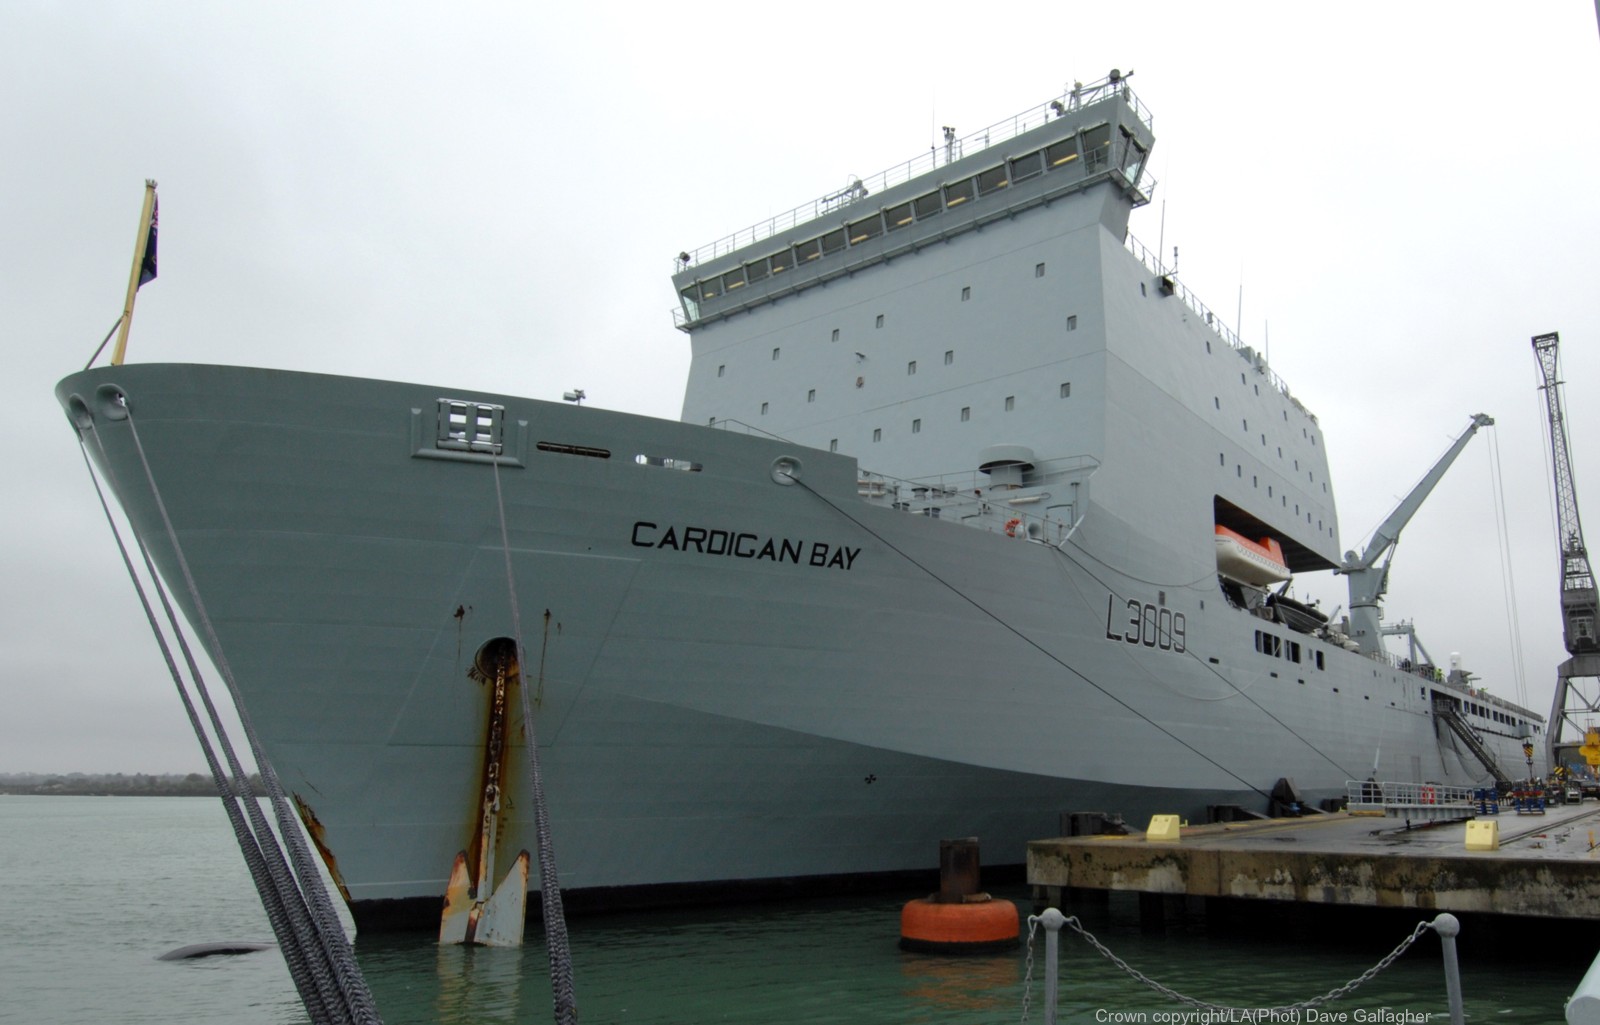 l-3009 rfa cardigan bay class dock landing ship lsd royal navy fleet auxilary 06